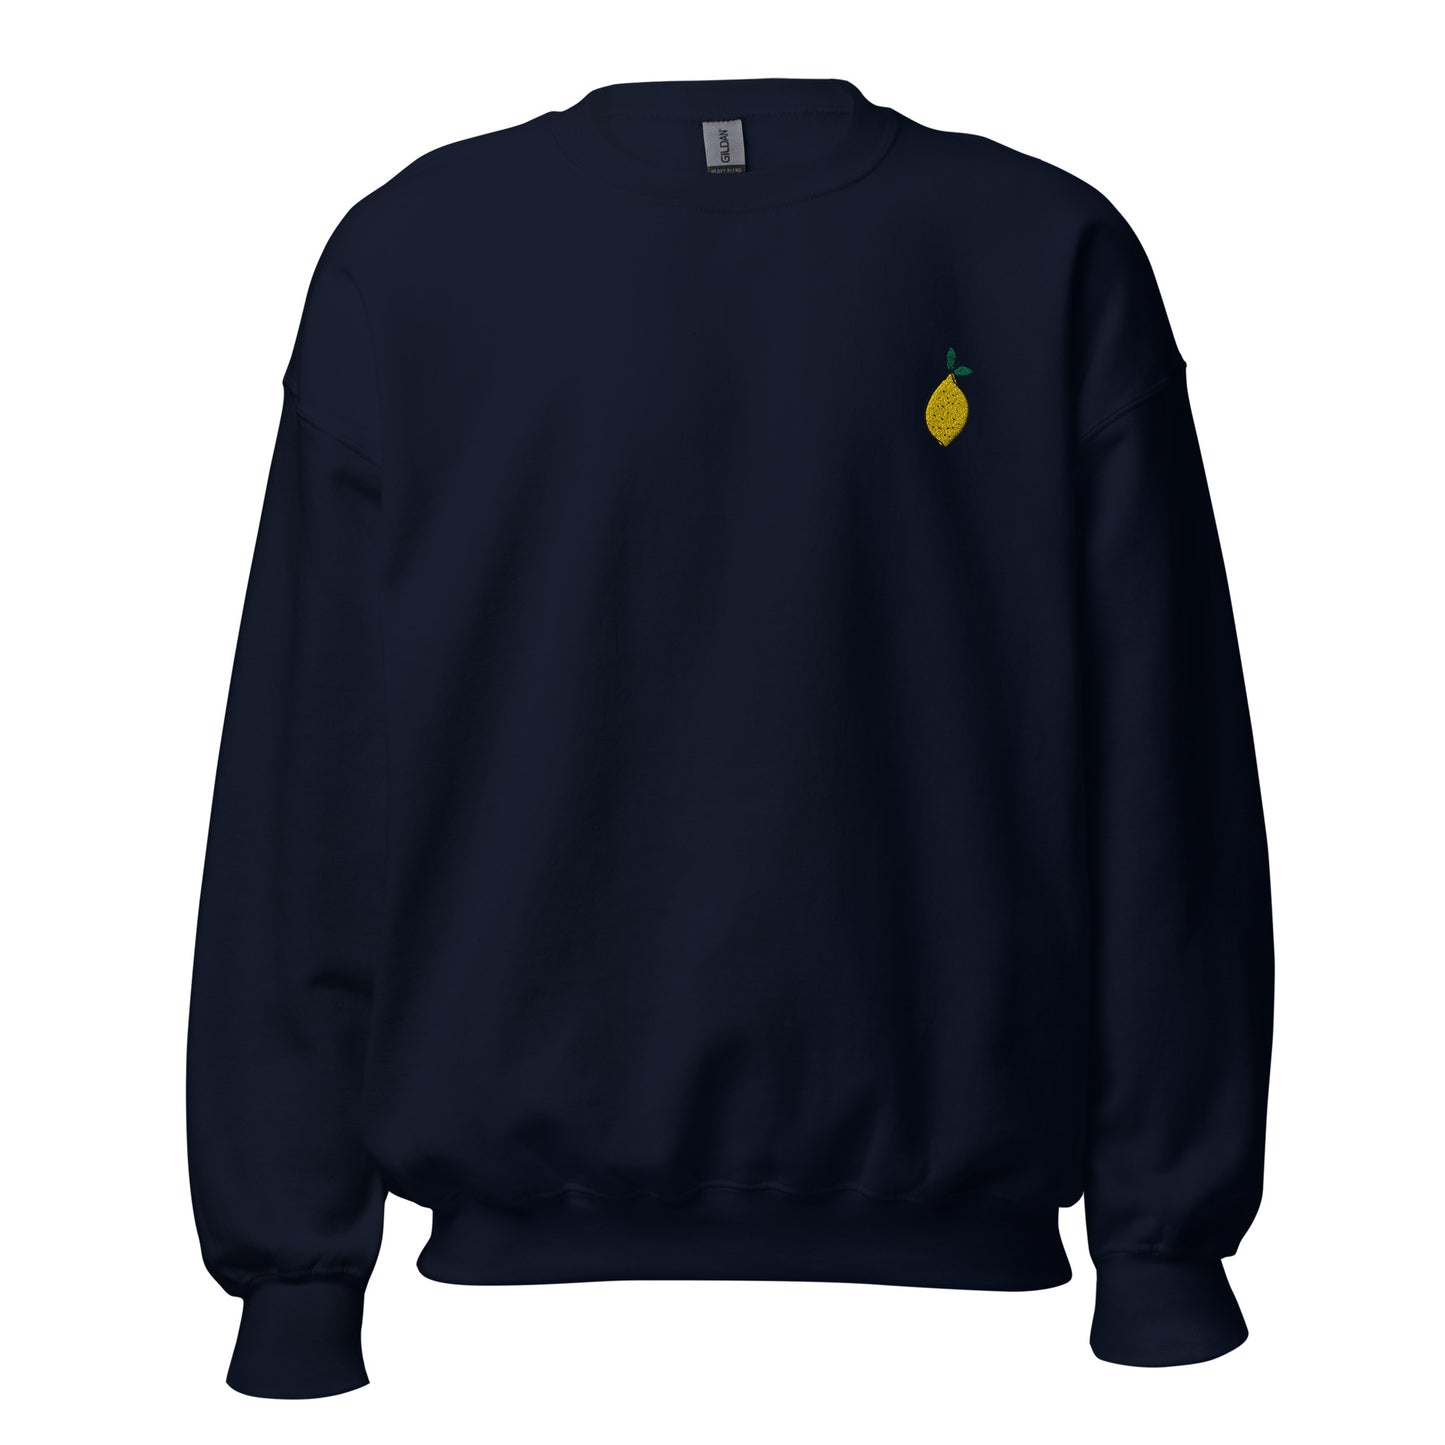 Lemon - Embroidered Unisex Sweatshirt